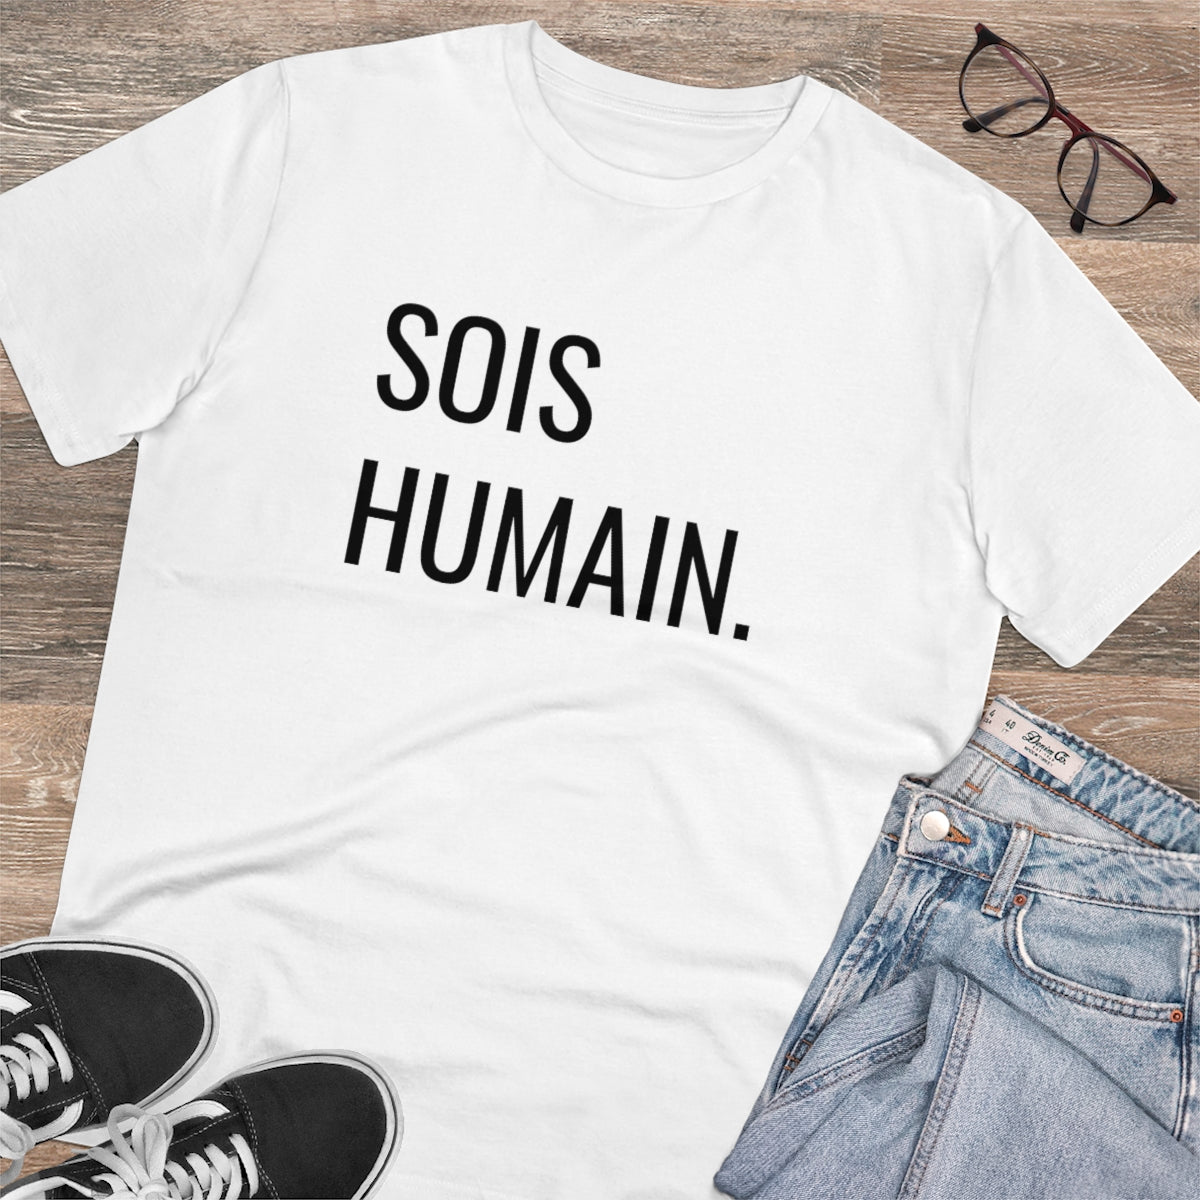 SOIS HUMAIN. - Organic Creator T-shirt - Unisex